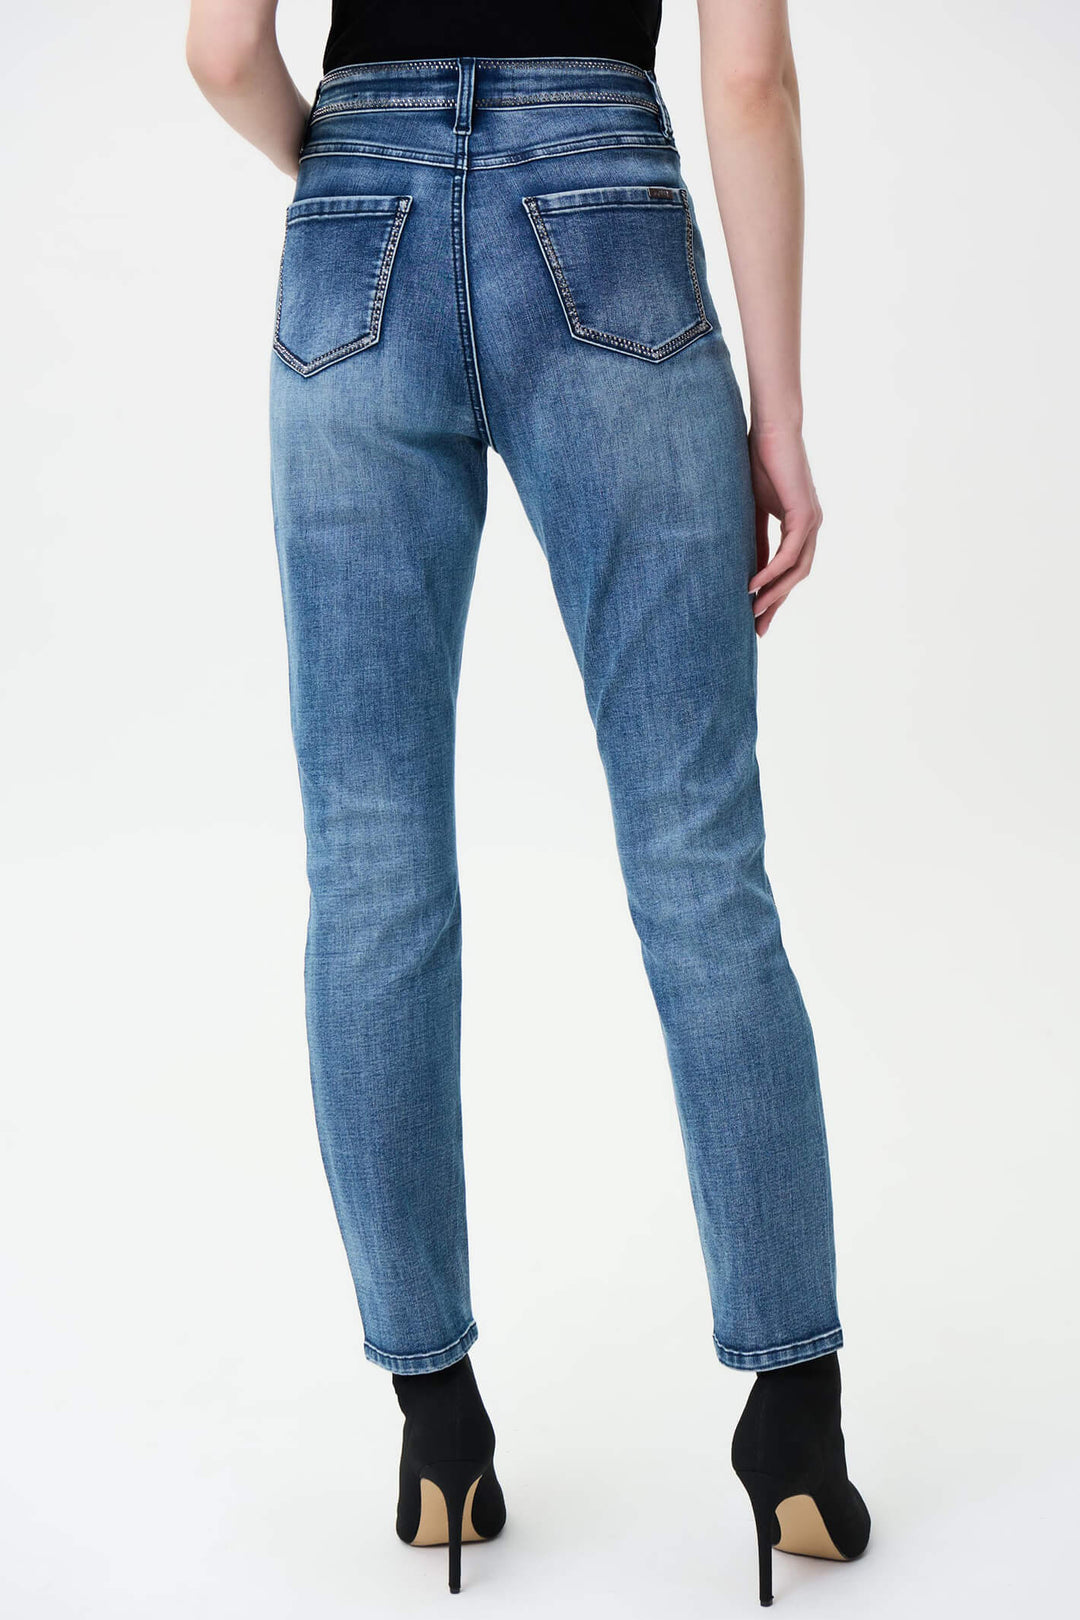 Joseph Ribkoff 224954 Medium Blue Embellished Denim Jeans - Experience Boutique